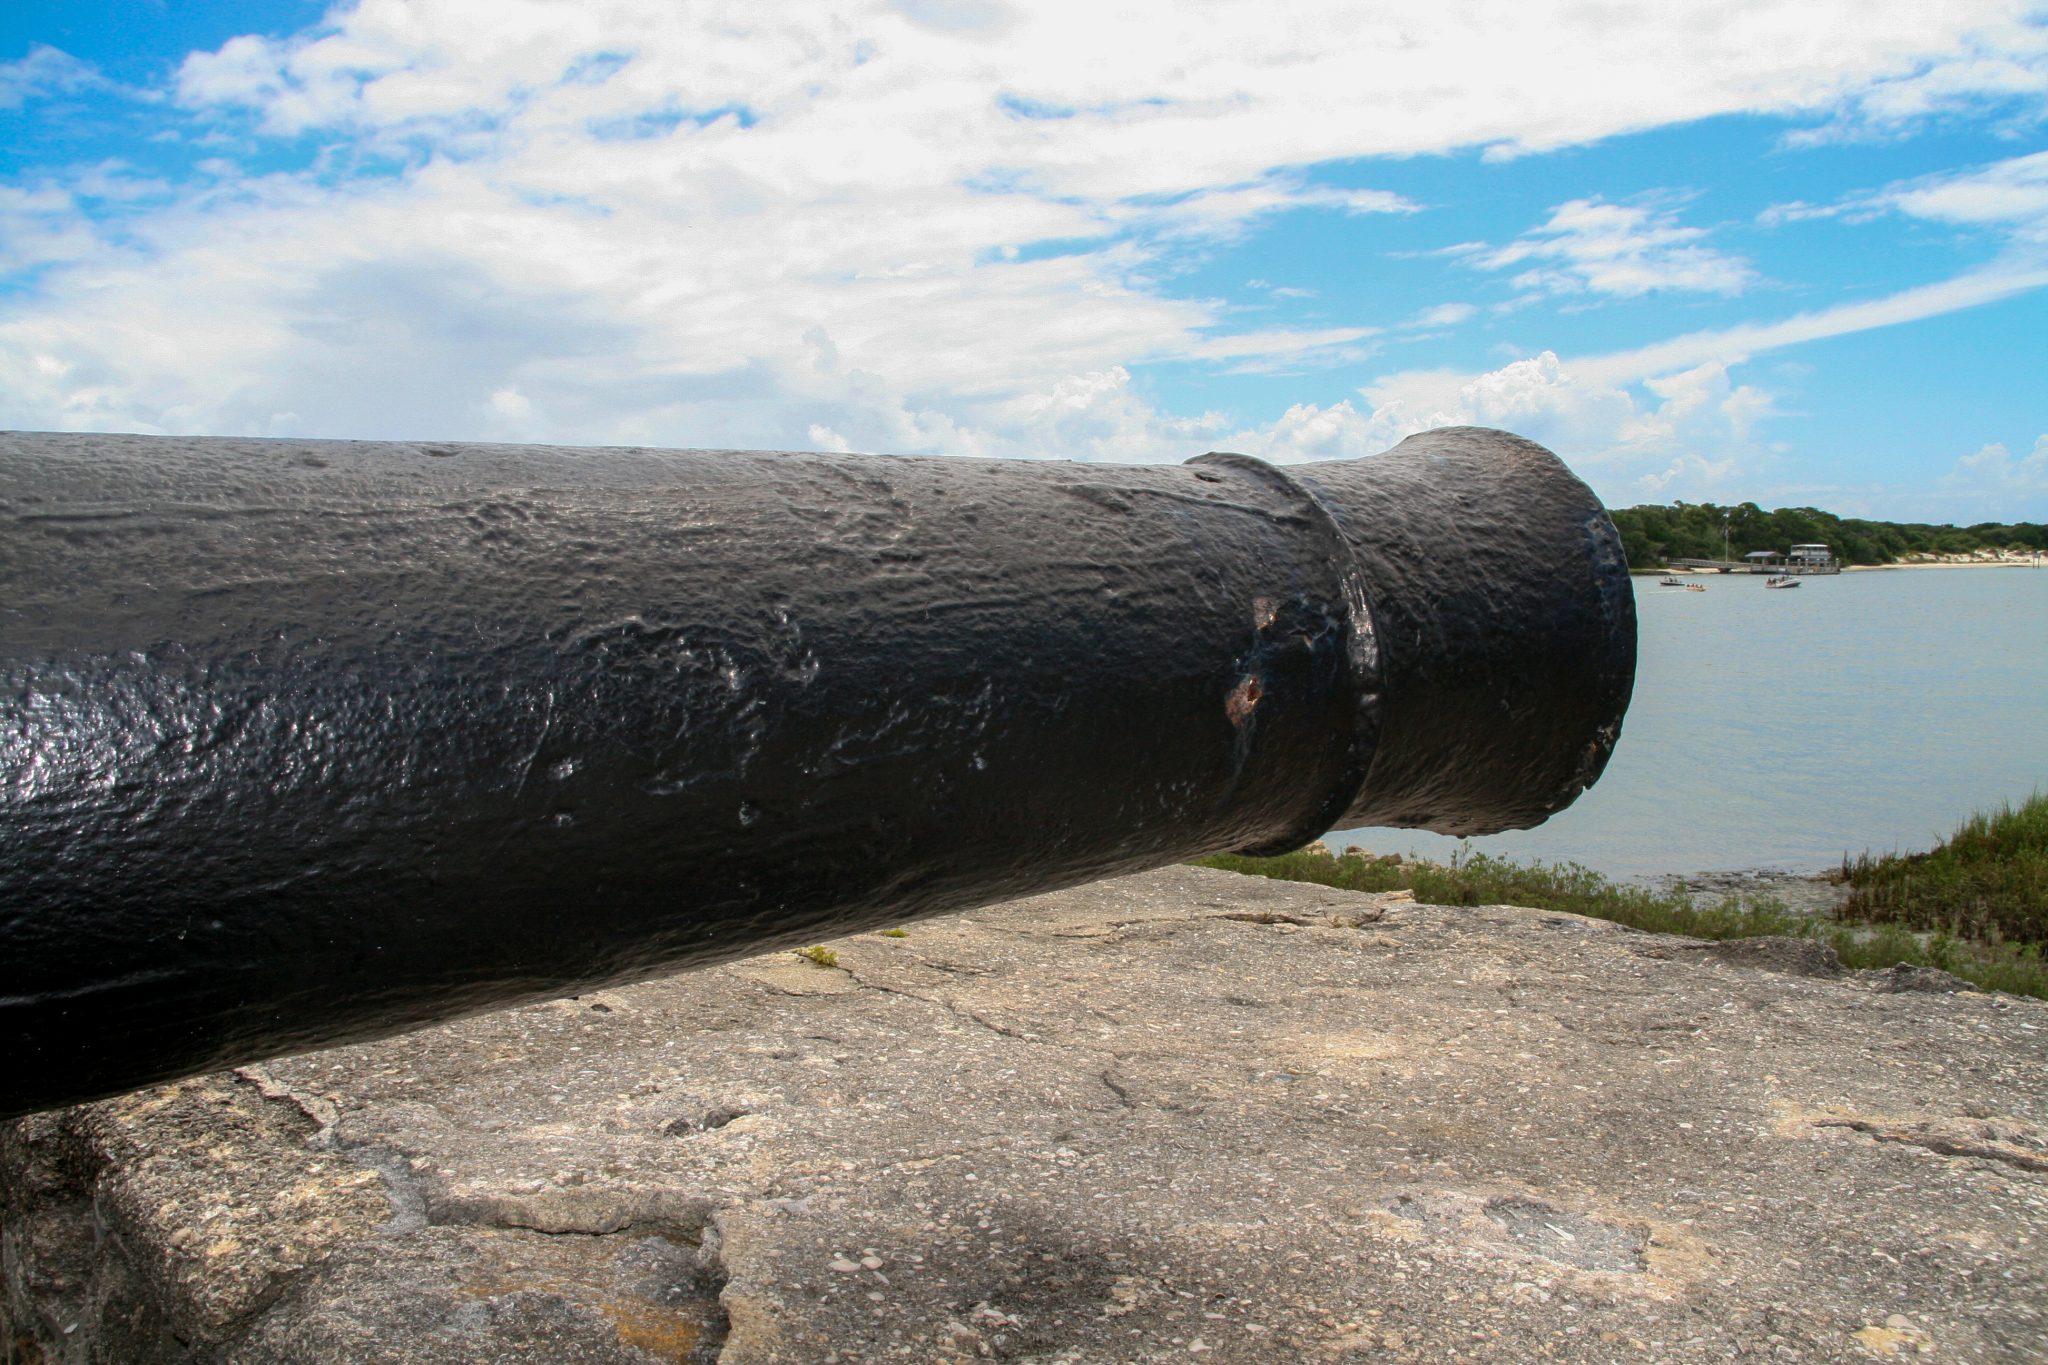 Spanish cannon at Fort Matanzas